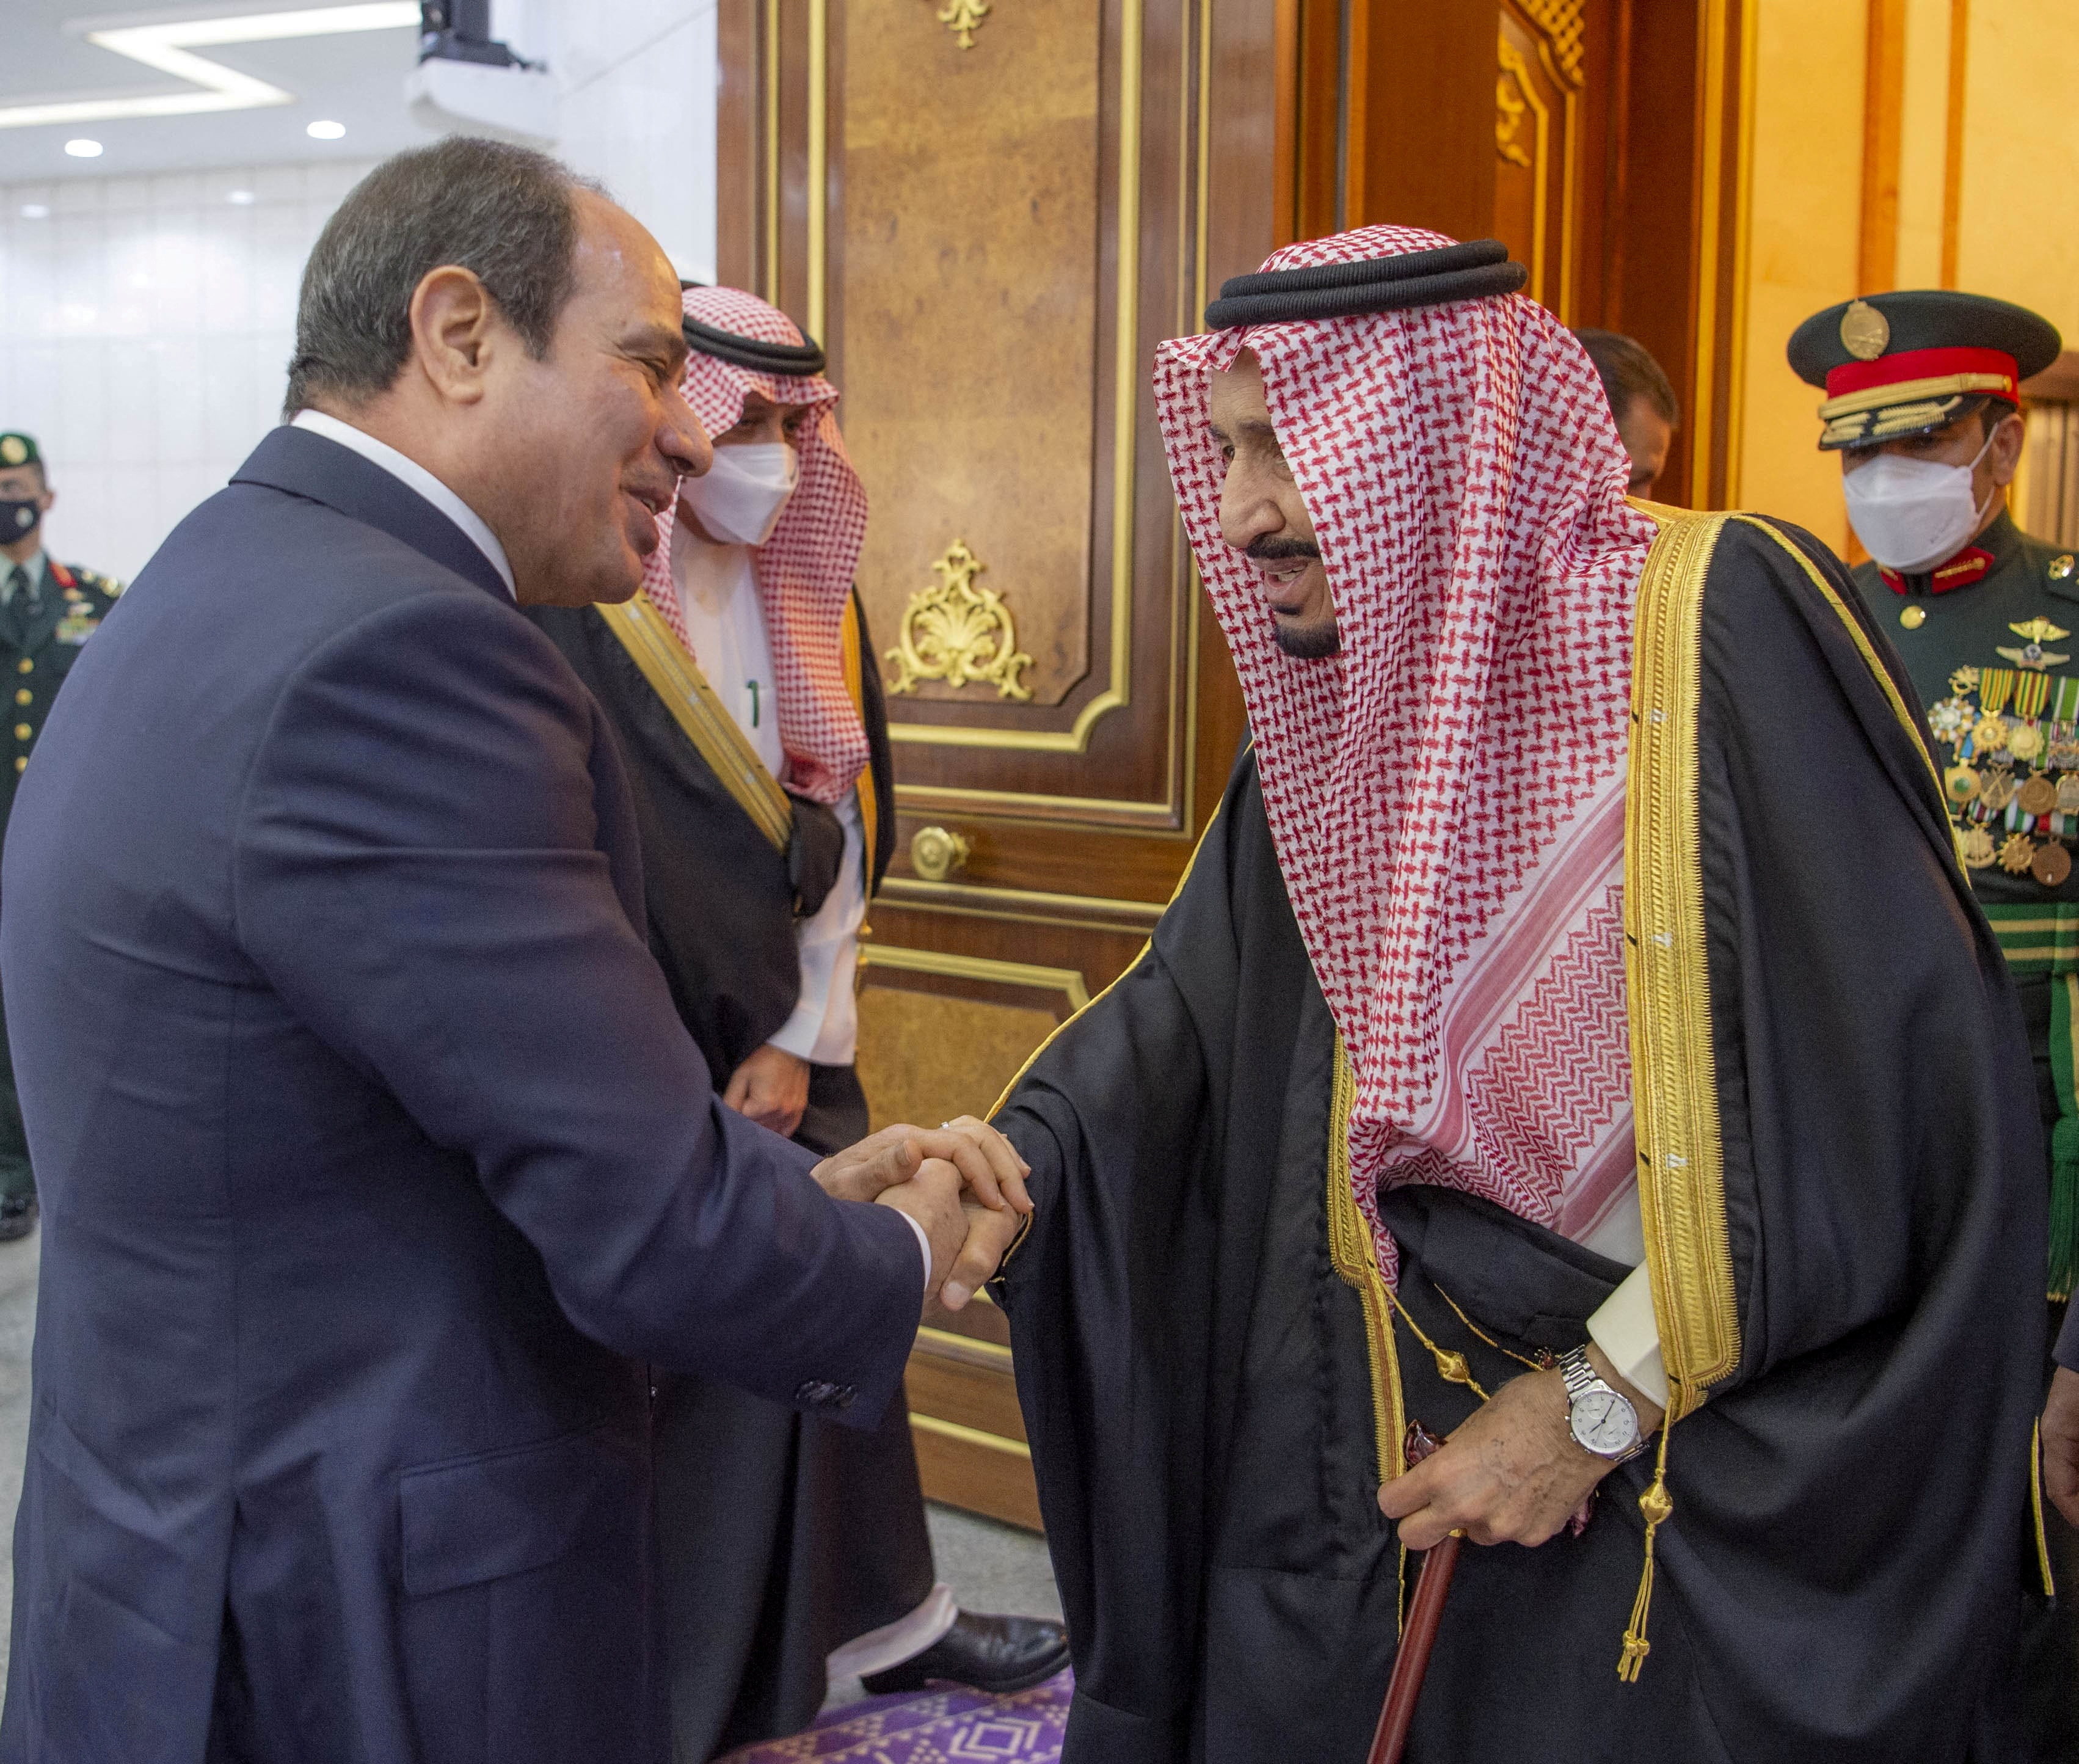 King of Saudi Arabia Salman bin Abdulaziz Al Saud meets Egyptian President Abdel Fattah al-Sisi during his visit to Riyadh